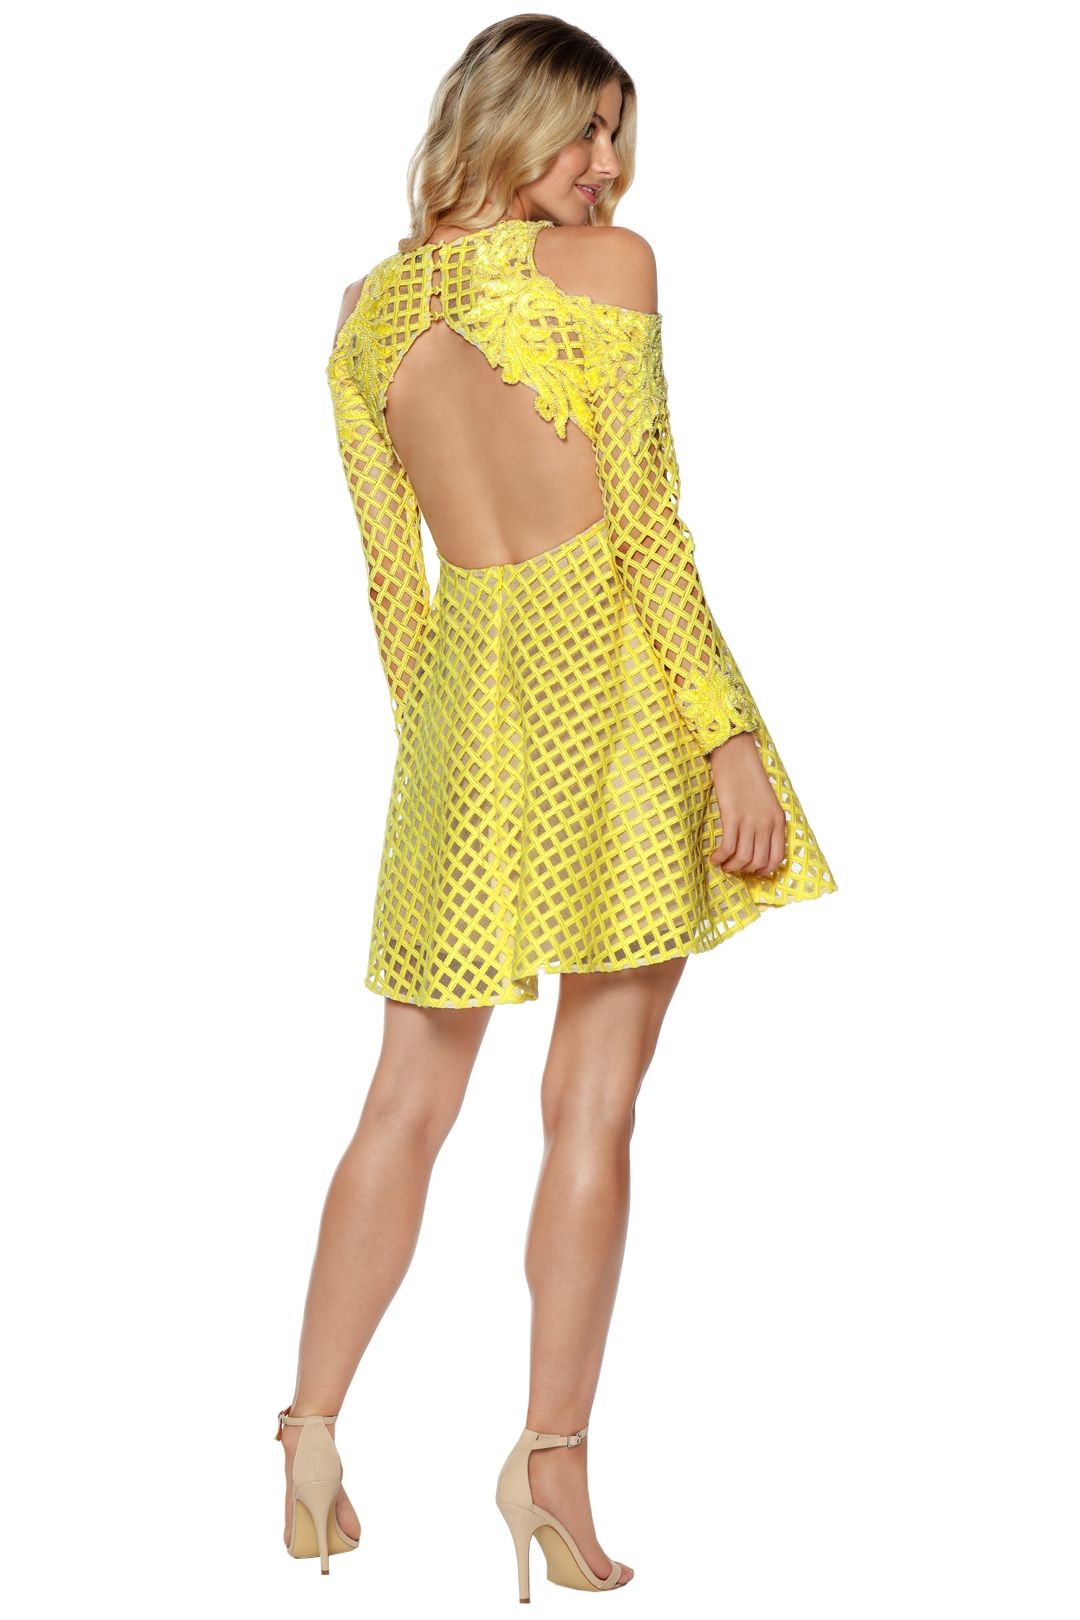 Thurley - Hybrid Dress Daffodil - Yellow - Back